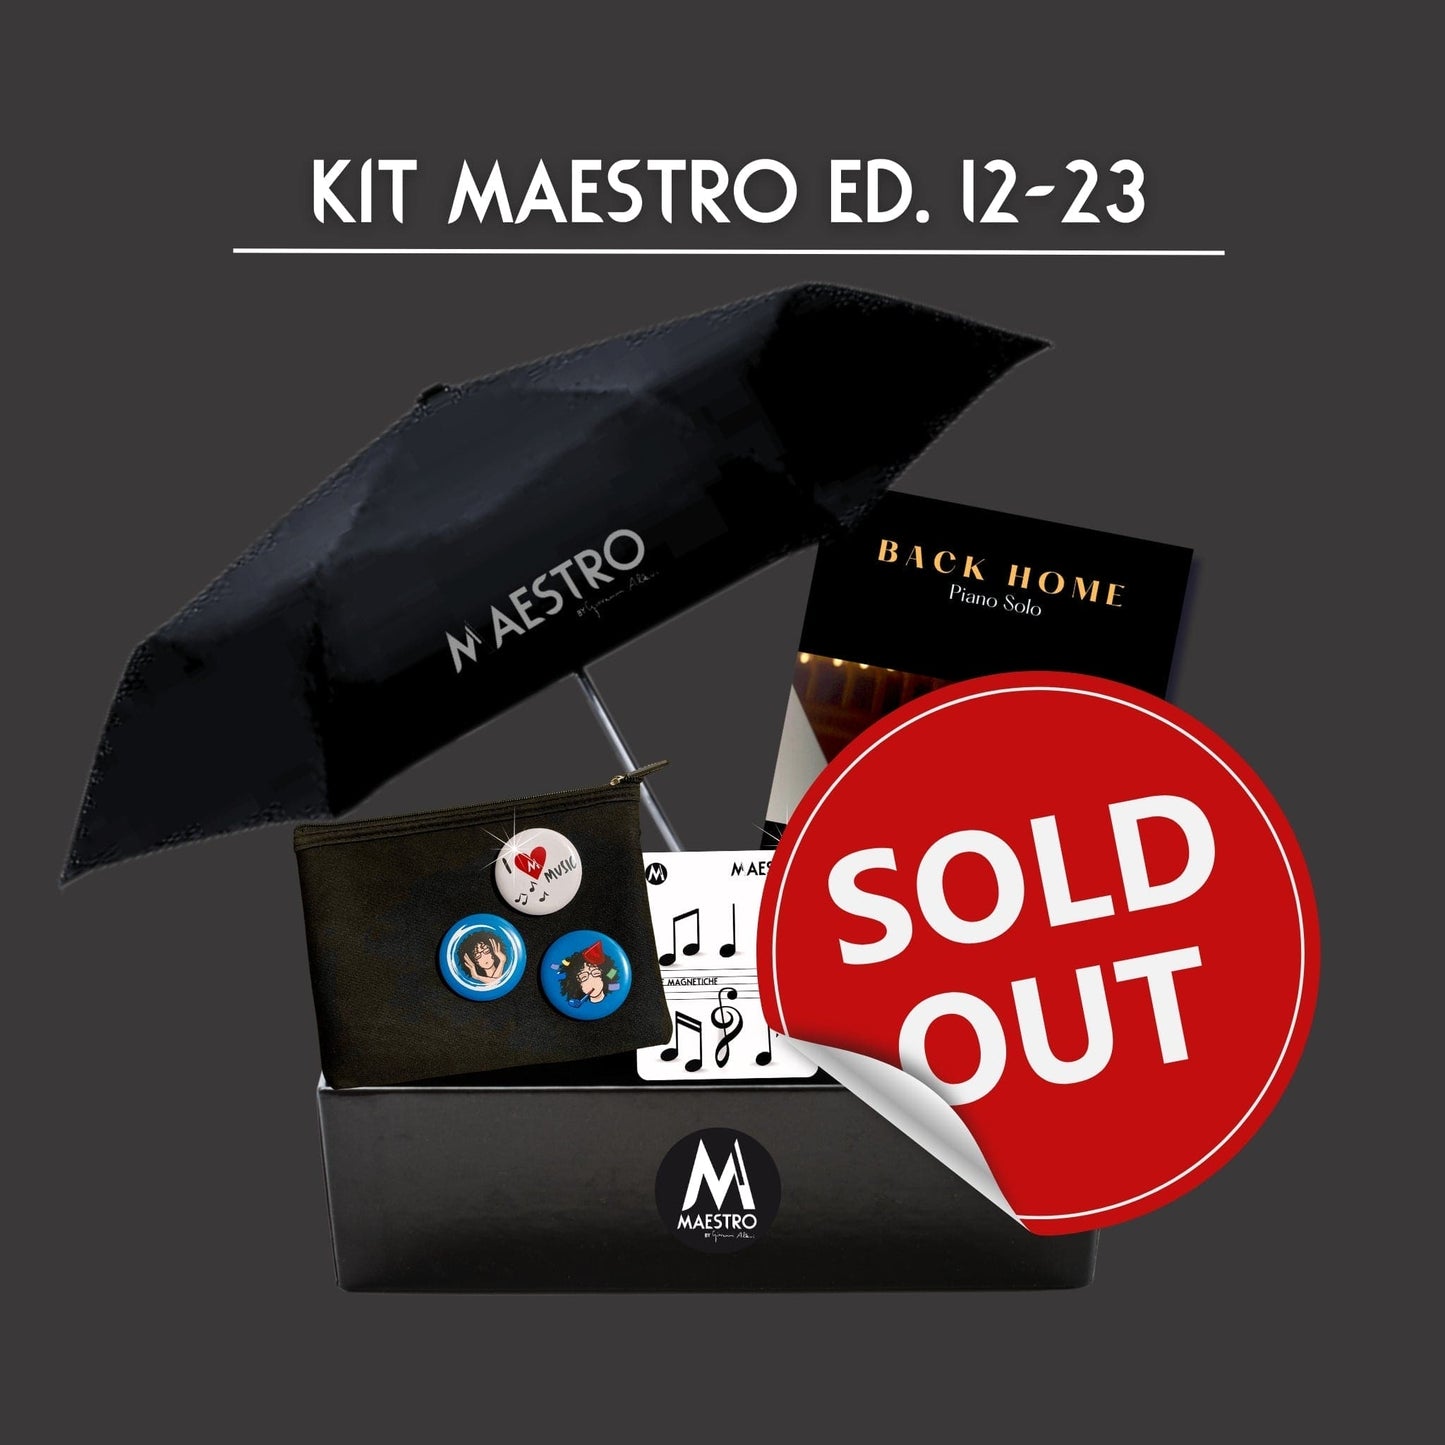 KIT MAESTRO - The gift box membership Club Maestro by Giovanni Allevi